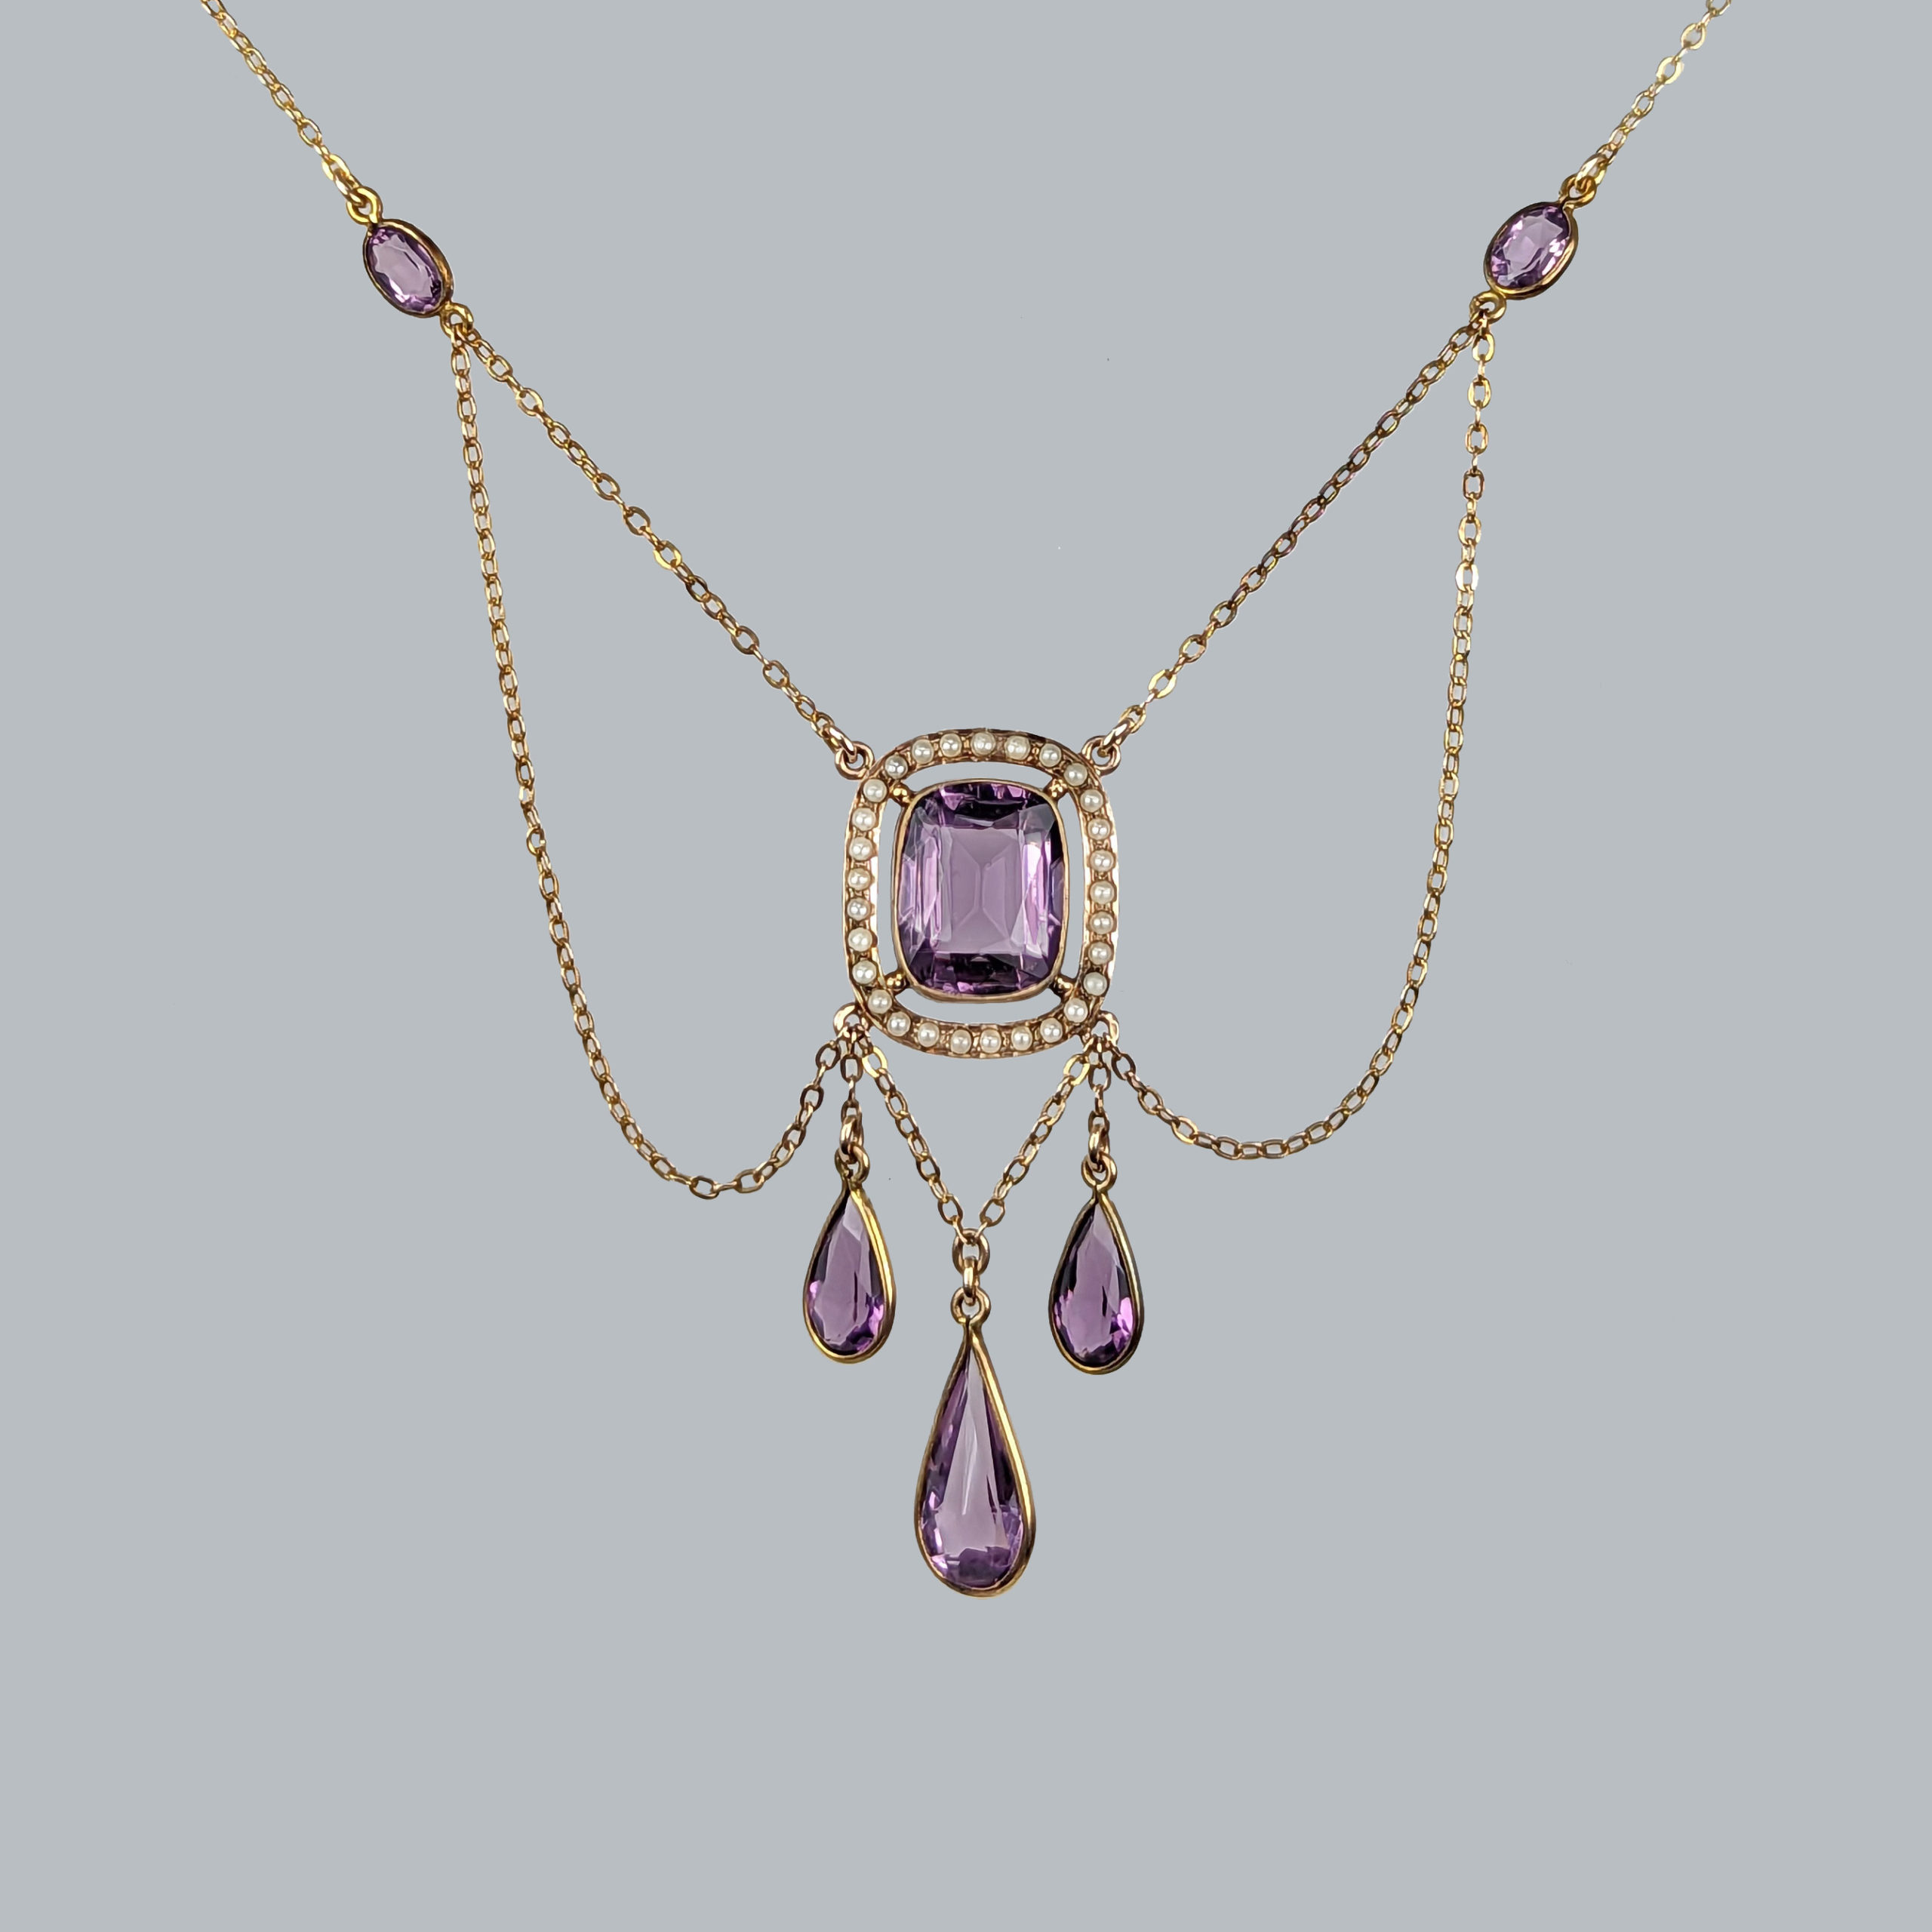 Antique amethyst pearl necklace